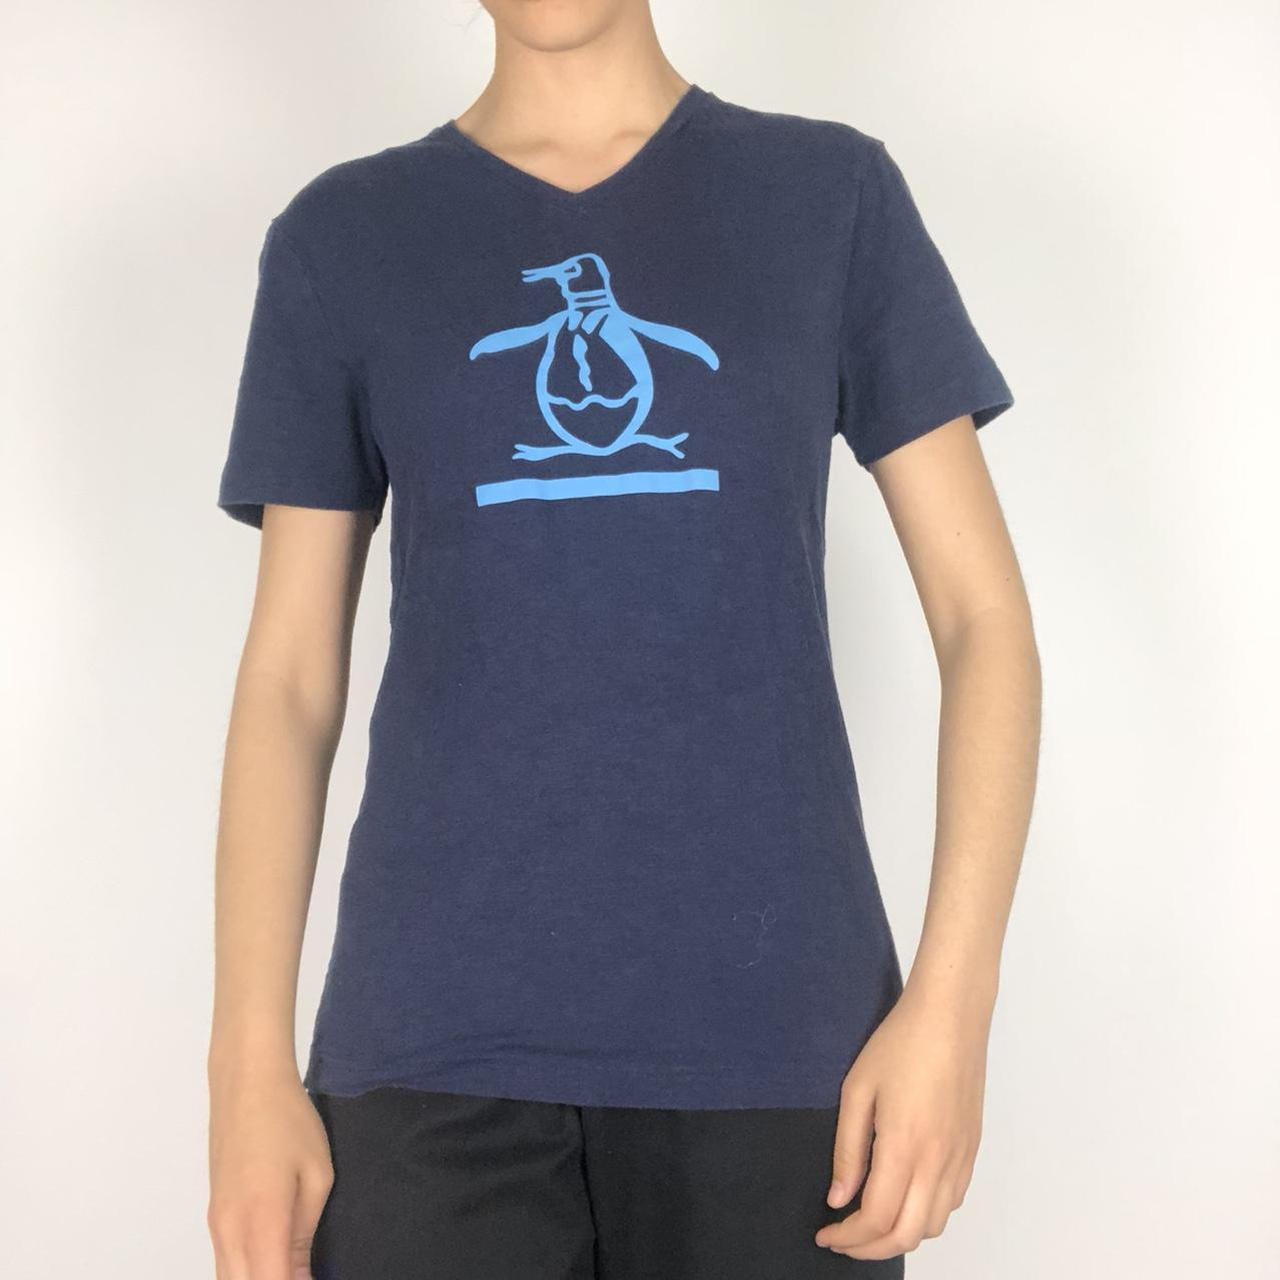 Product Image 2 - Navy blue original penguin shirt

Form